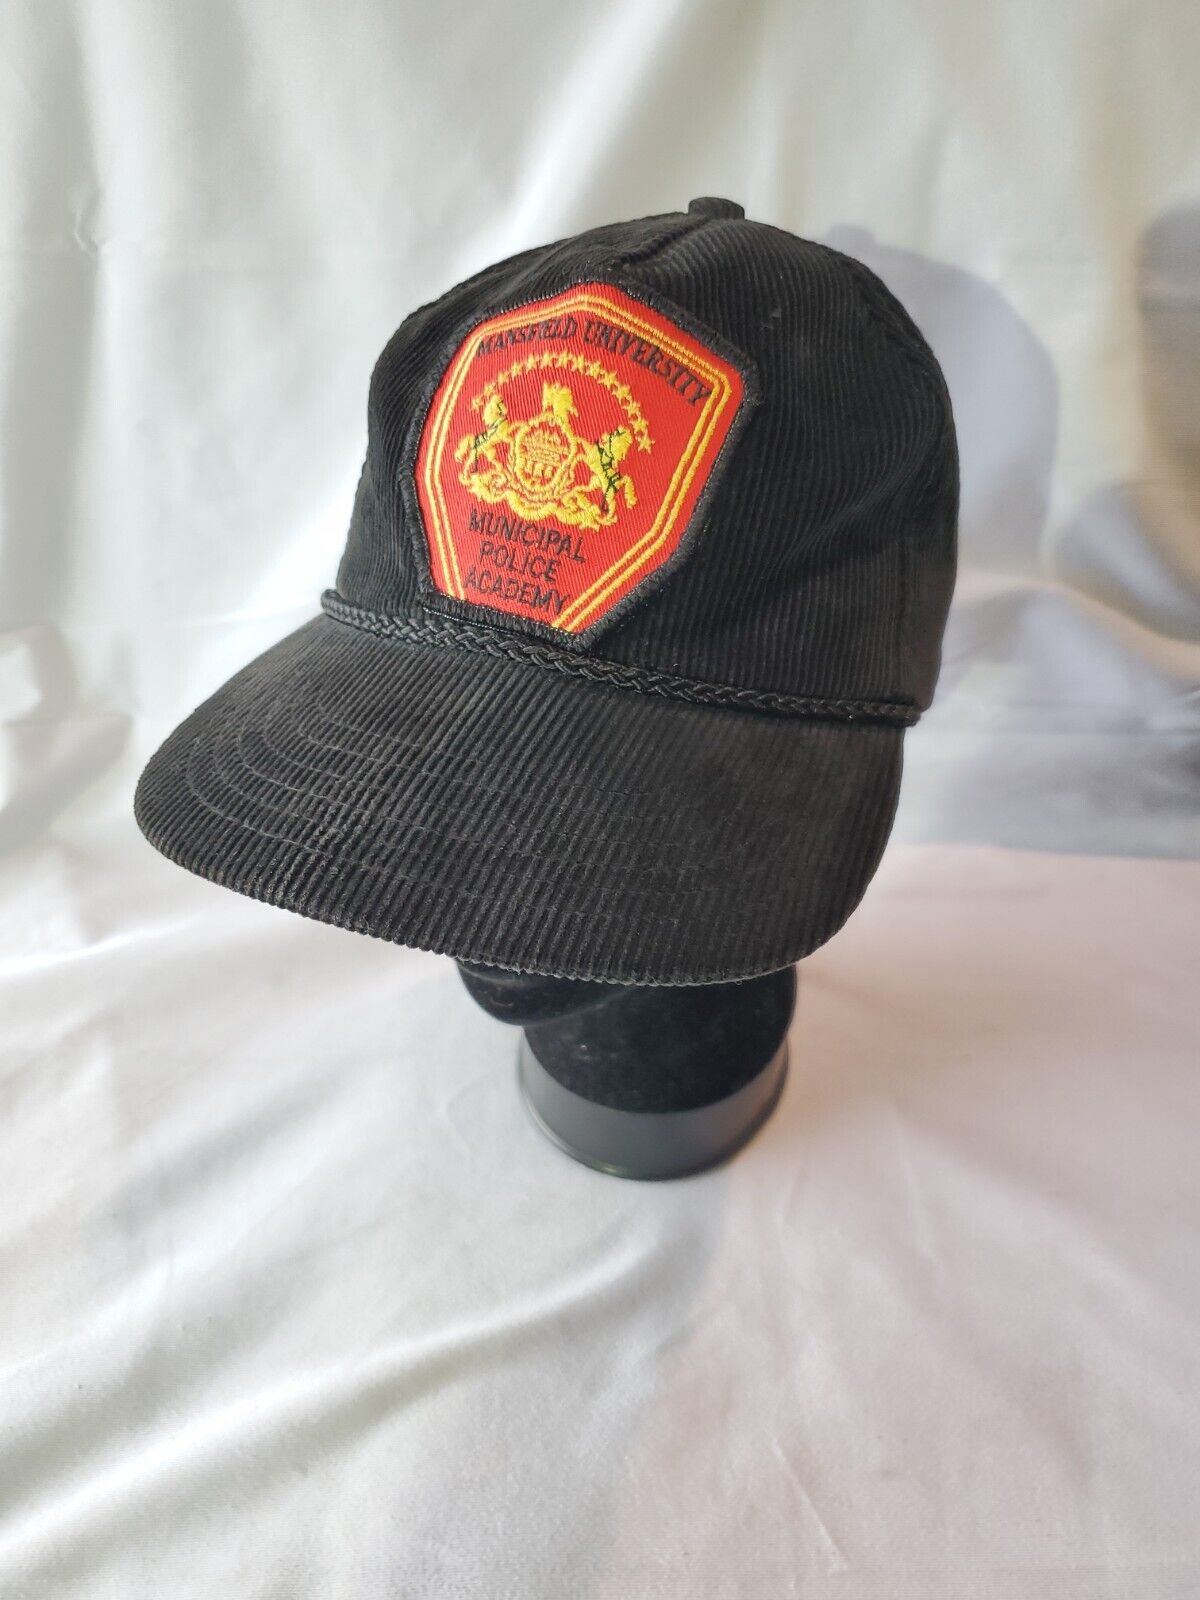 Vintage Mansfield University Municipal Police Academy Corduroy Hat Snapback